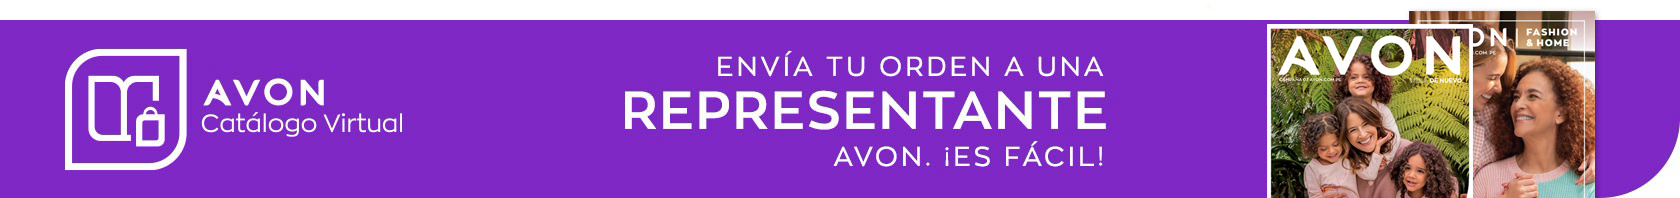 Catálogos Avon Colombia